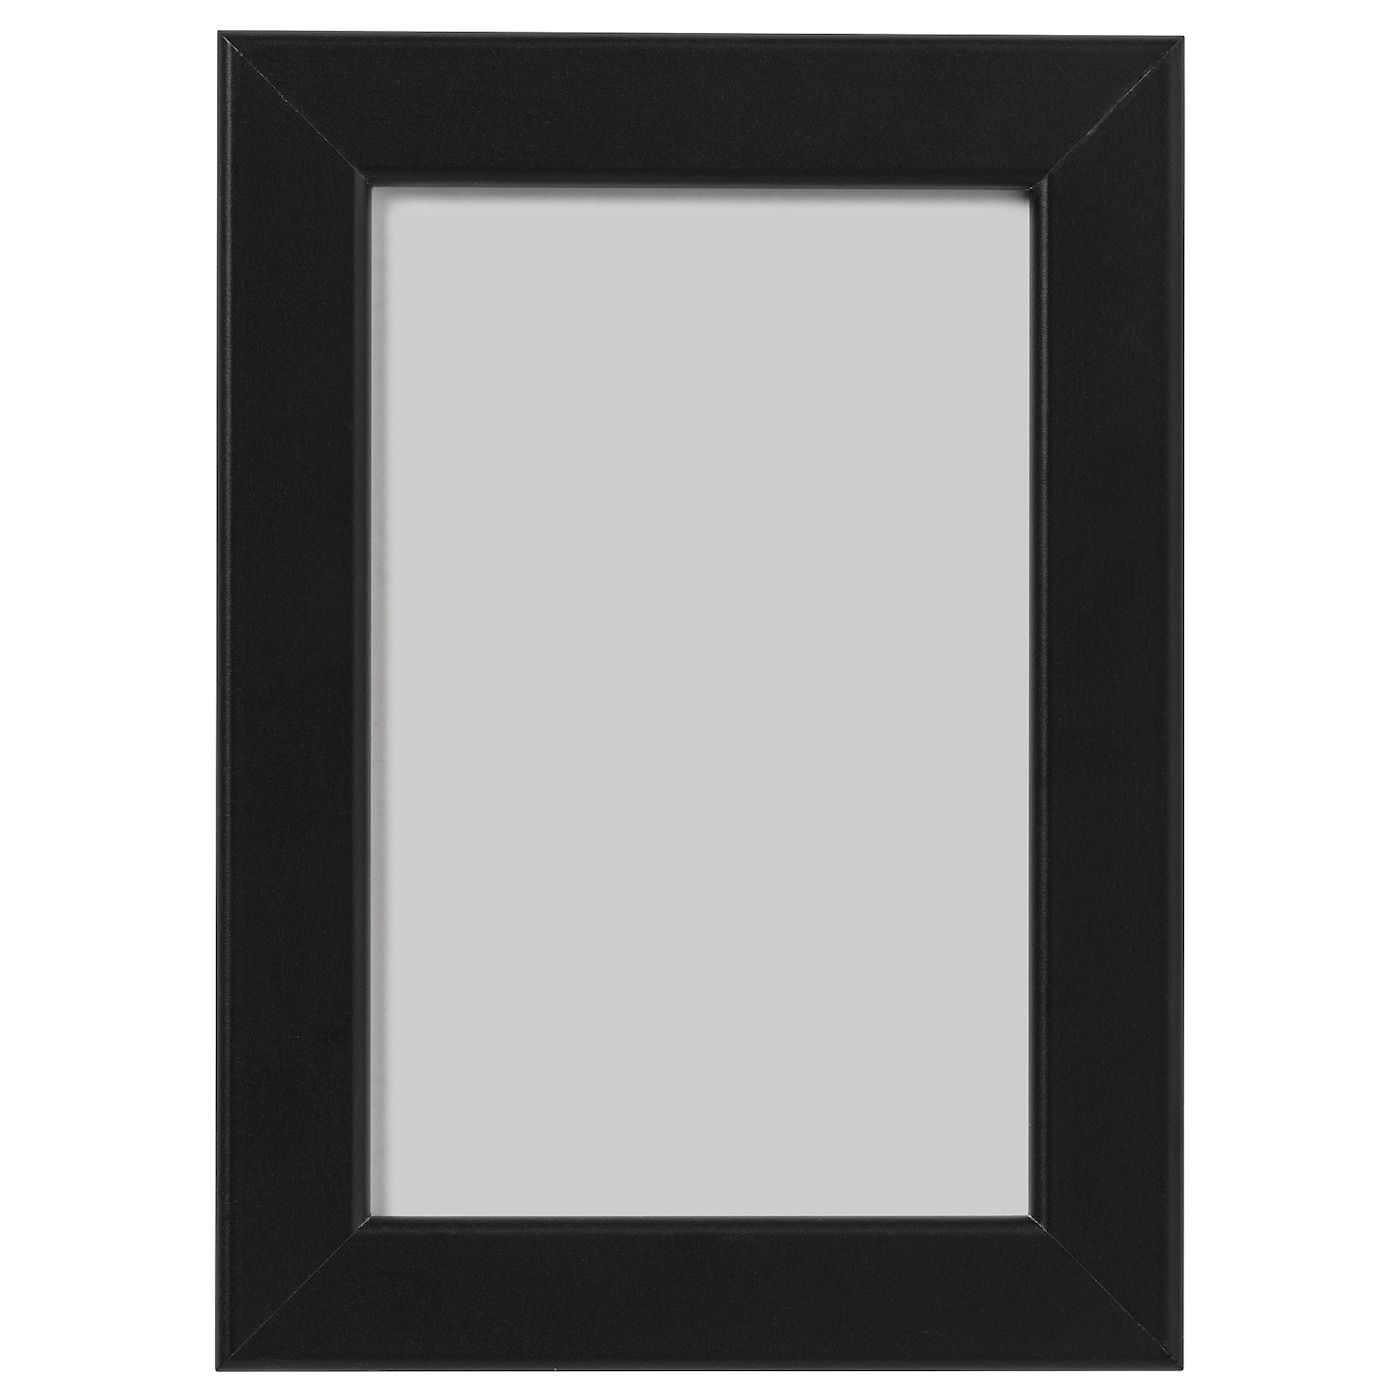 Рамка - IKEA FISKBO, 10х15 см, черный, ФИСКБО ИКЕА